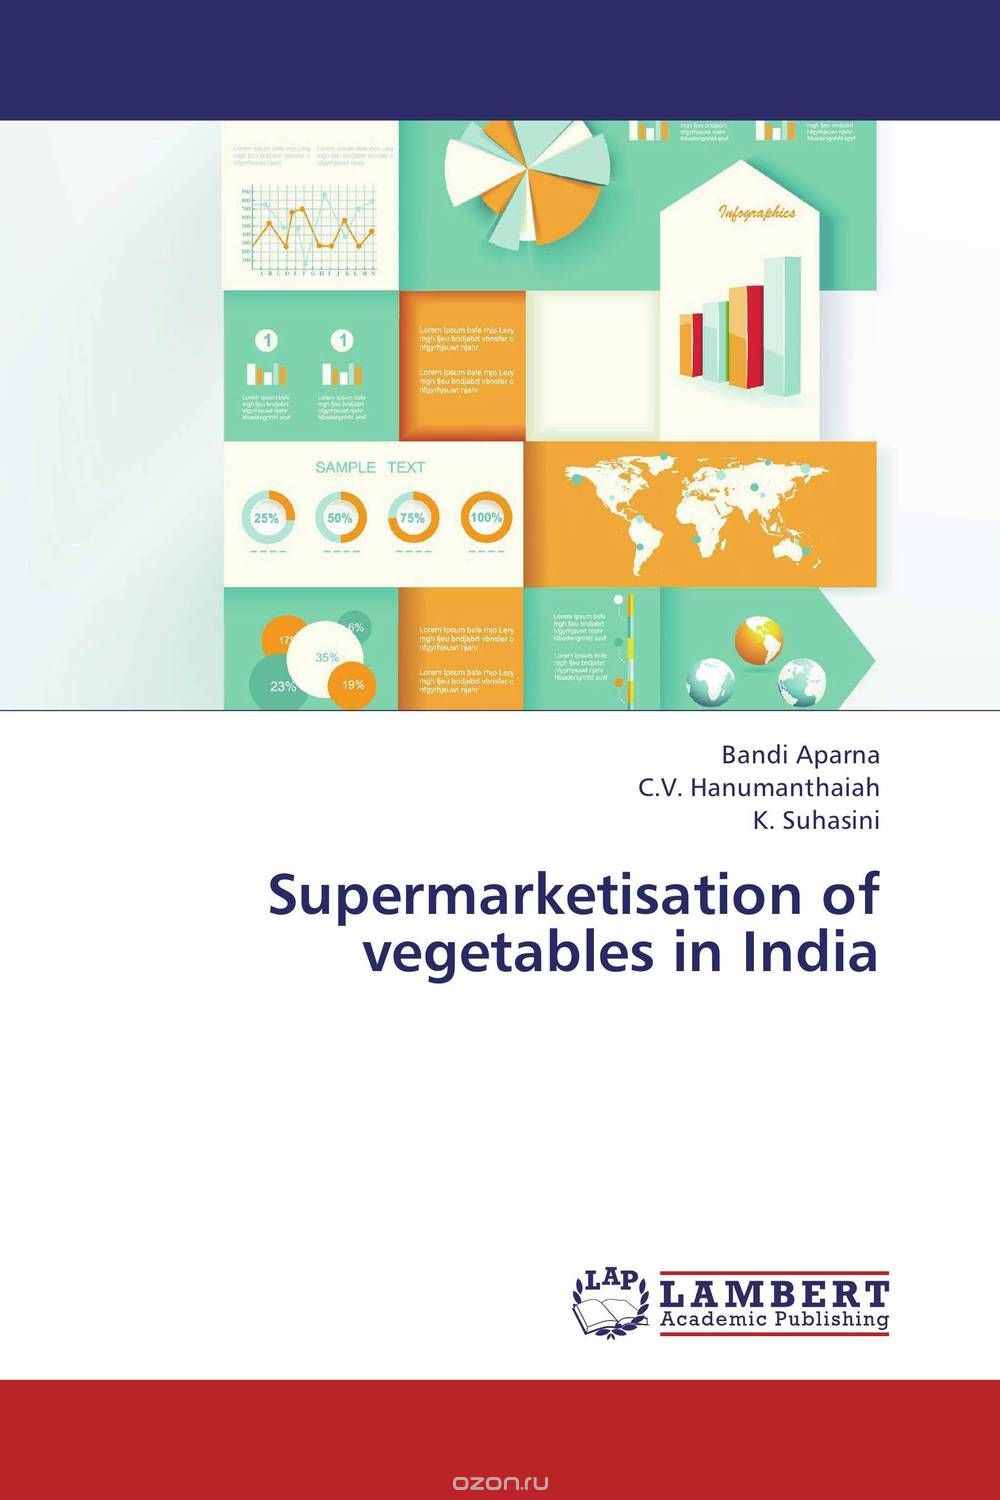 Скачать книгу "Supermarketisation of vegetables in India"